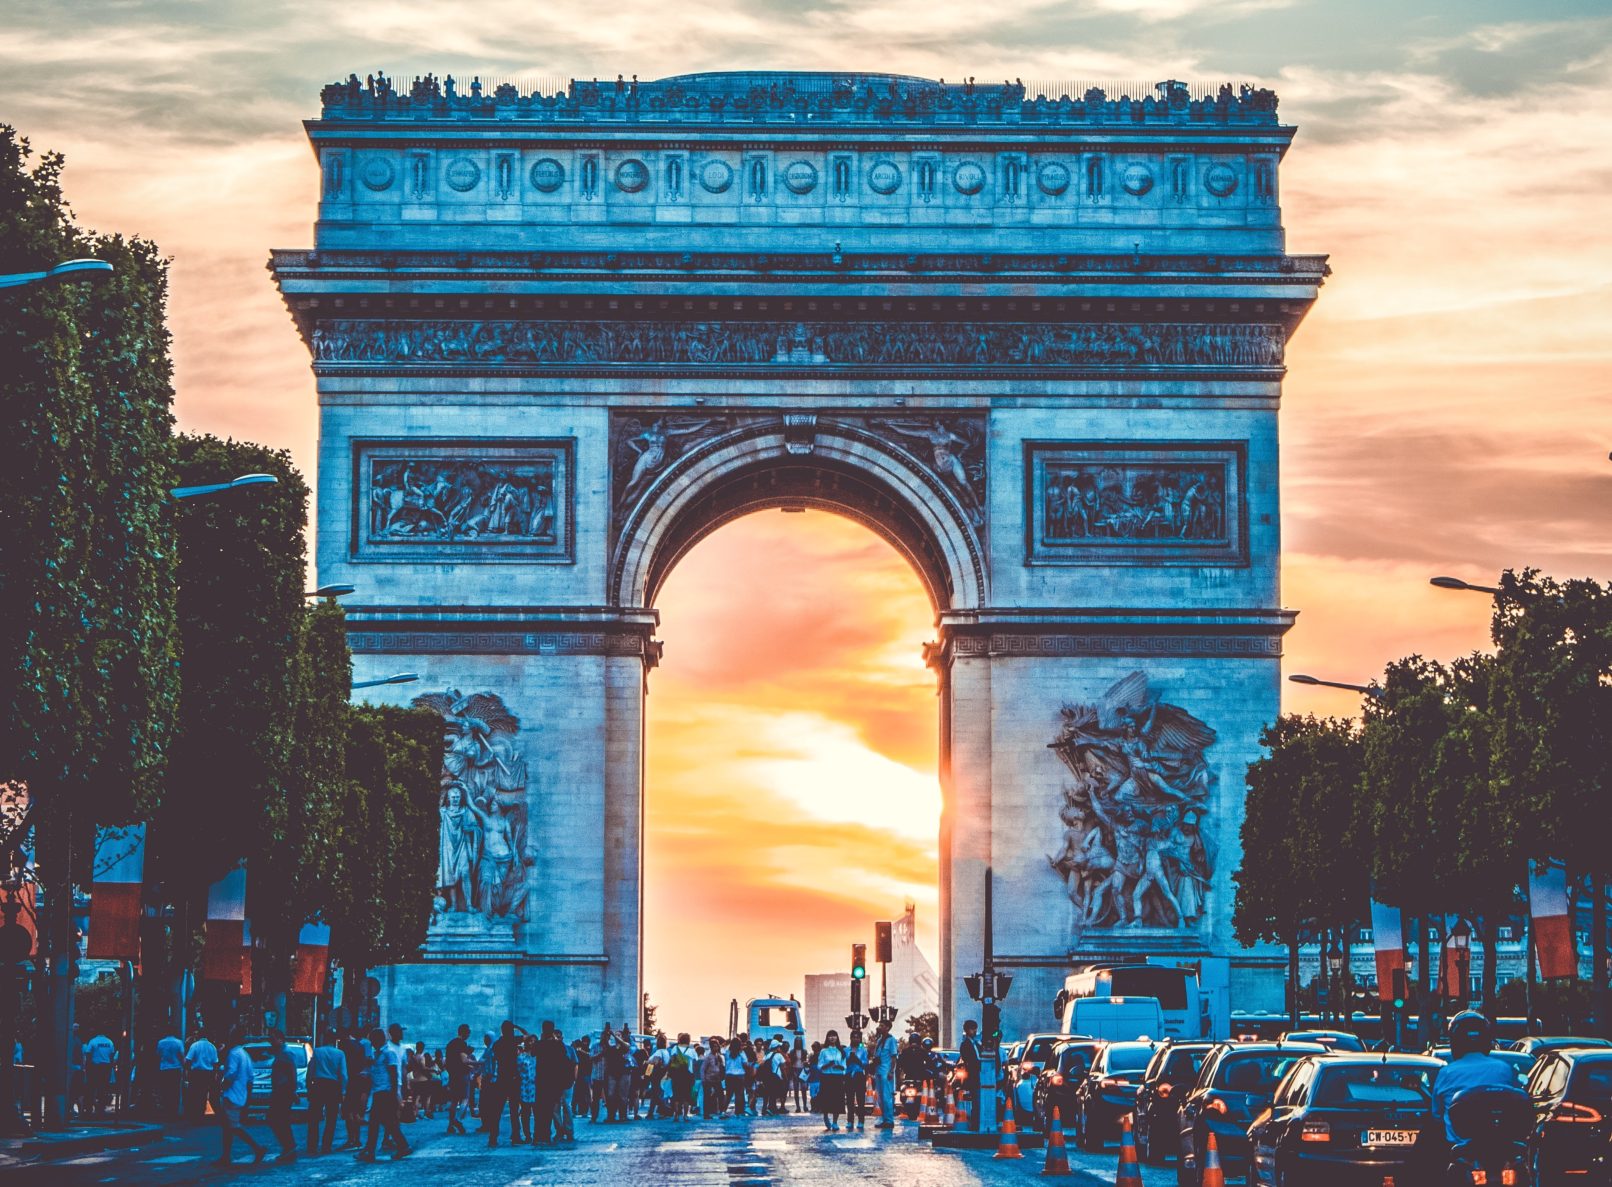 Weekend in Paris | Top Museums & Attractions to visit in Paris